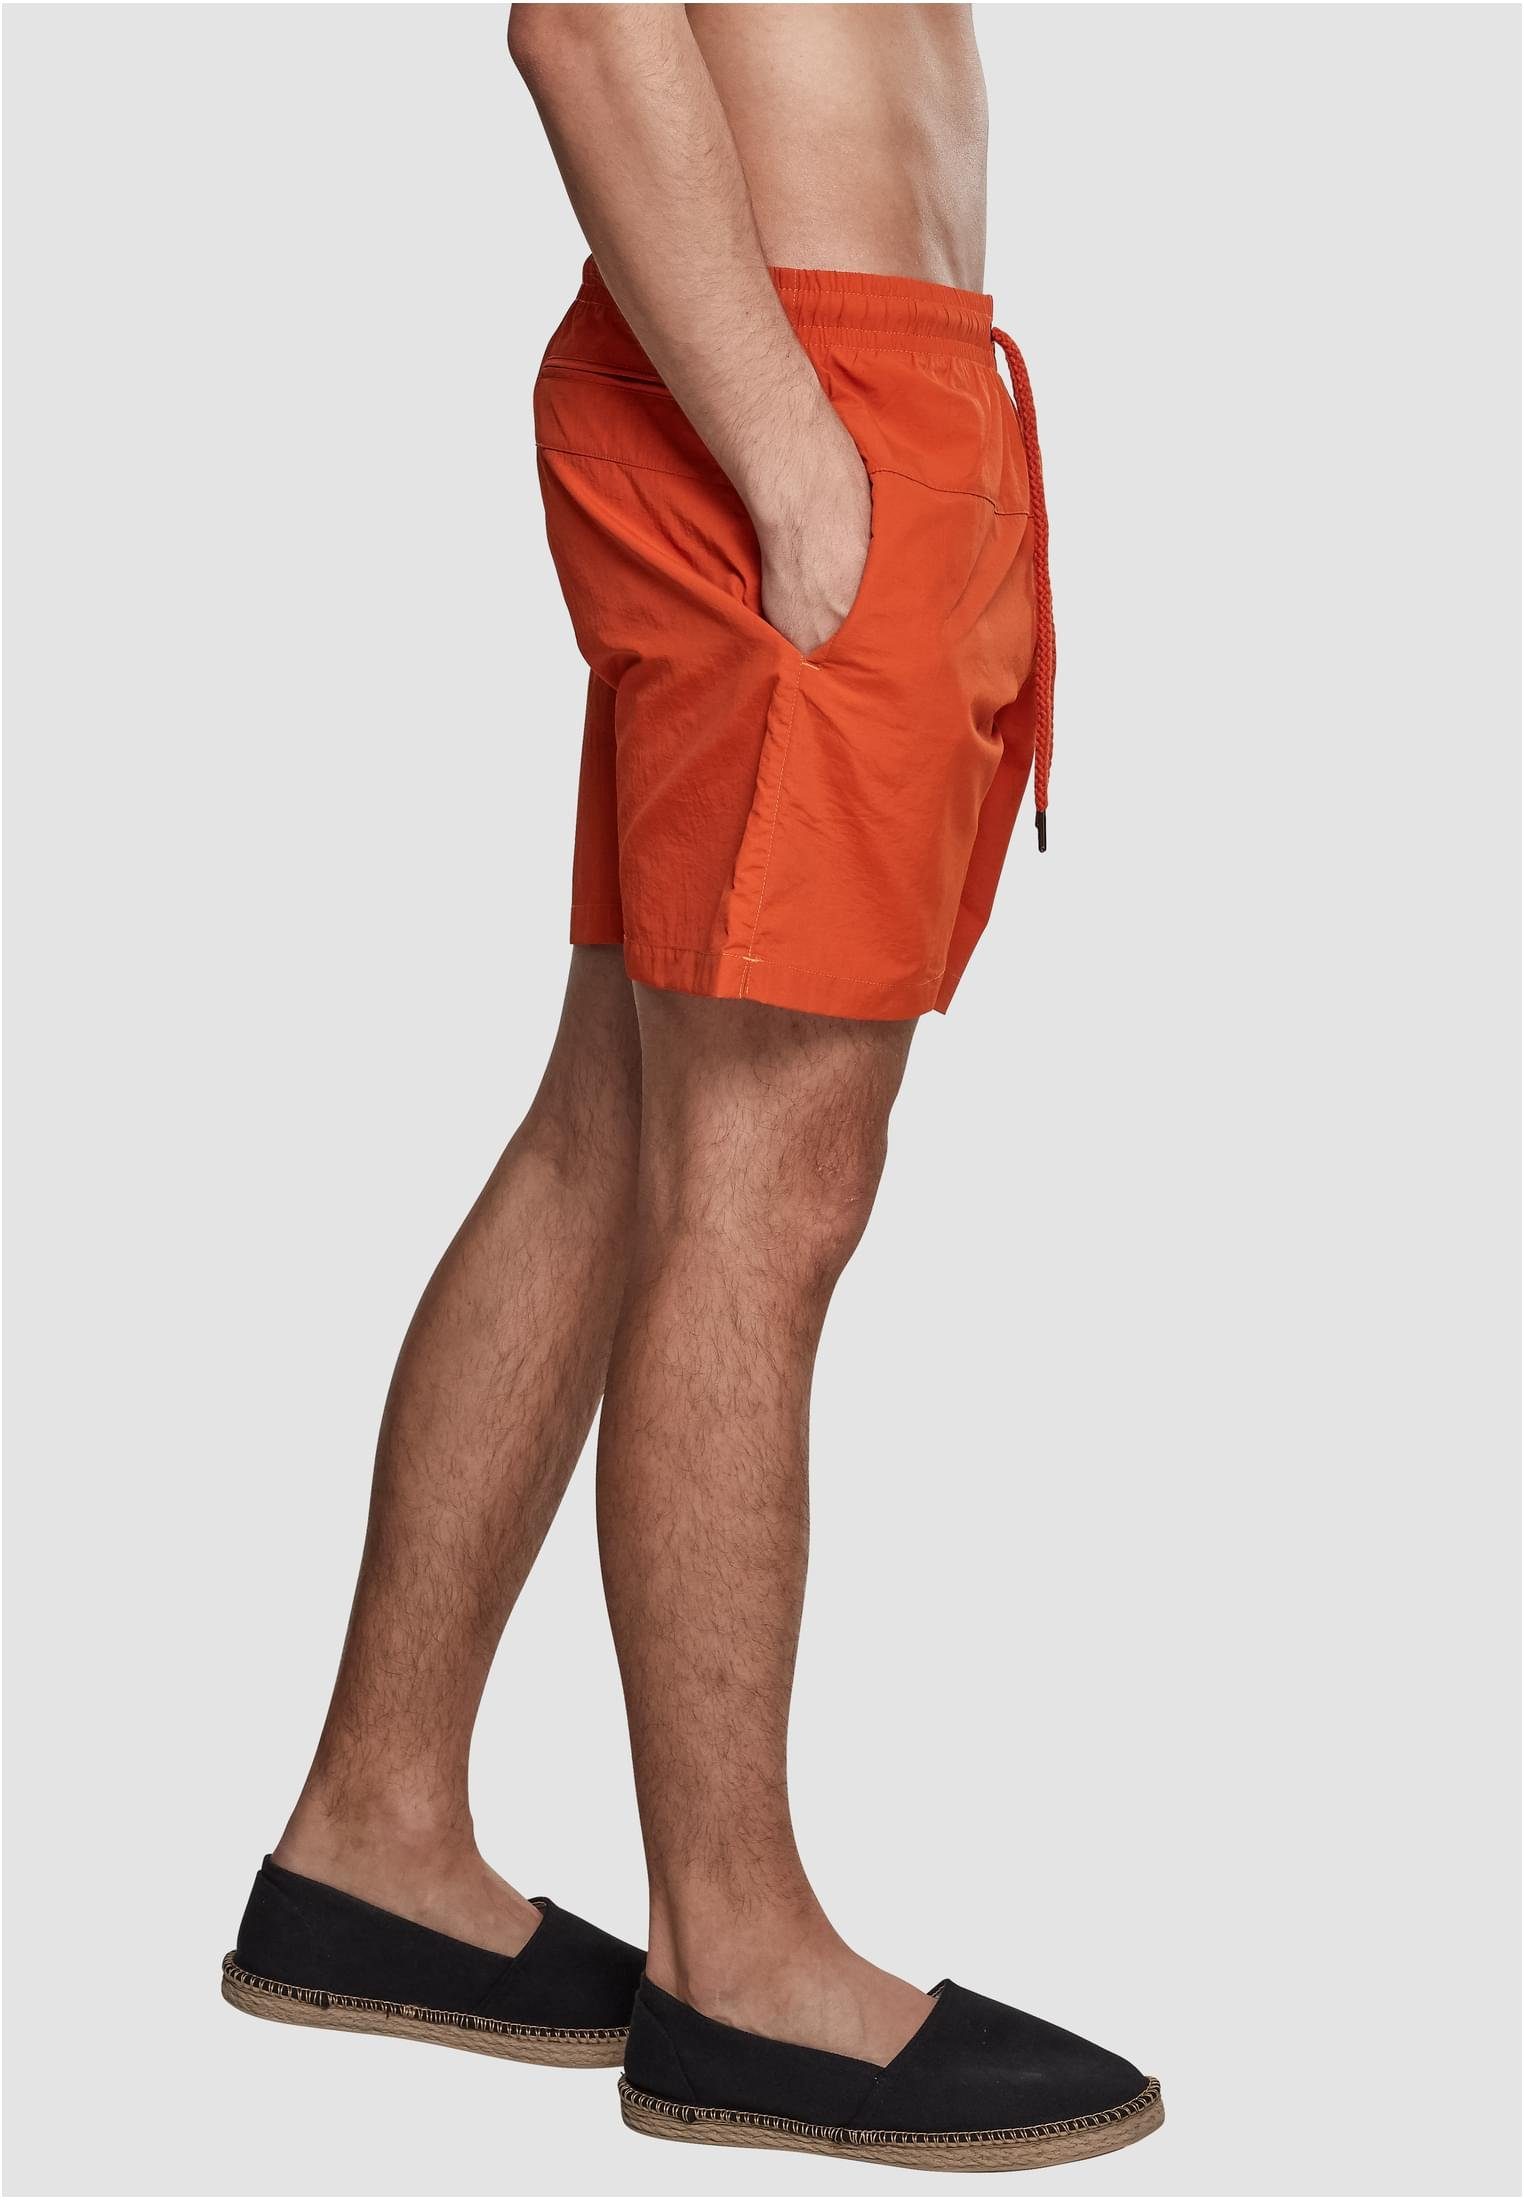 rust CLASSICS Shorts Herren URBAN Swim orange Badeshorts